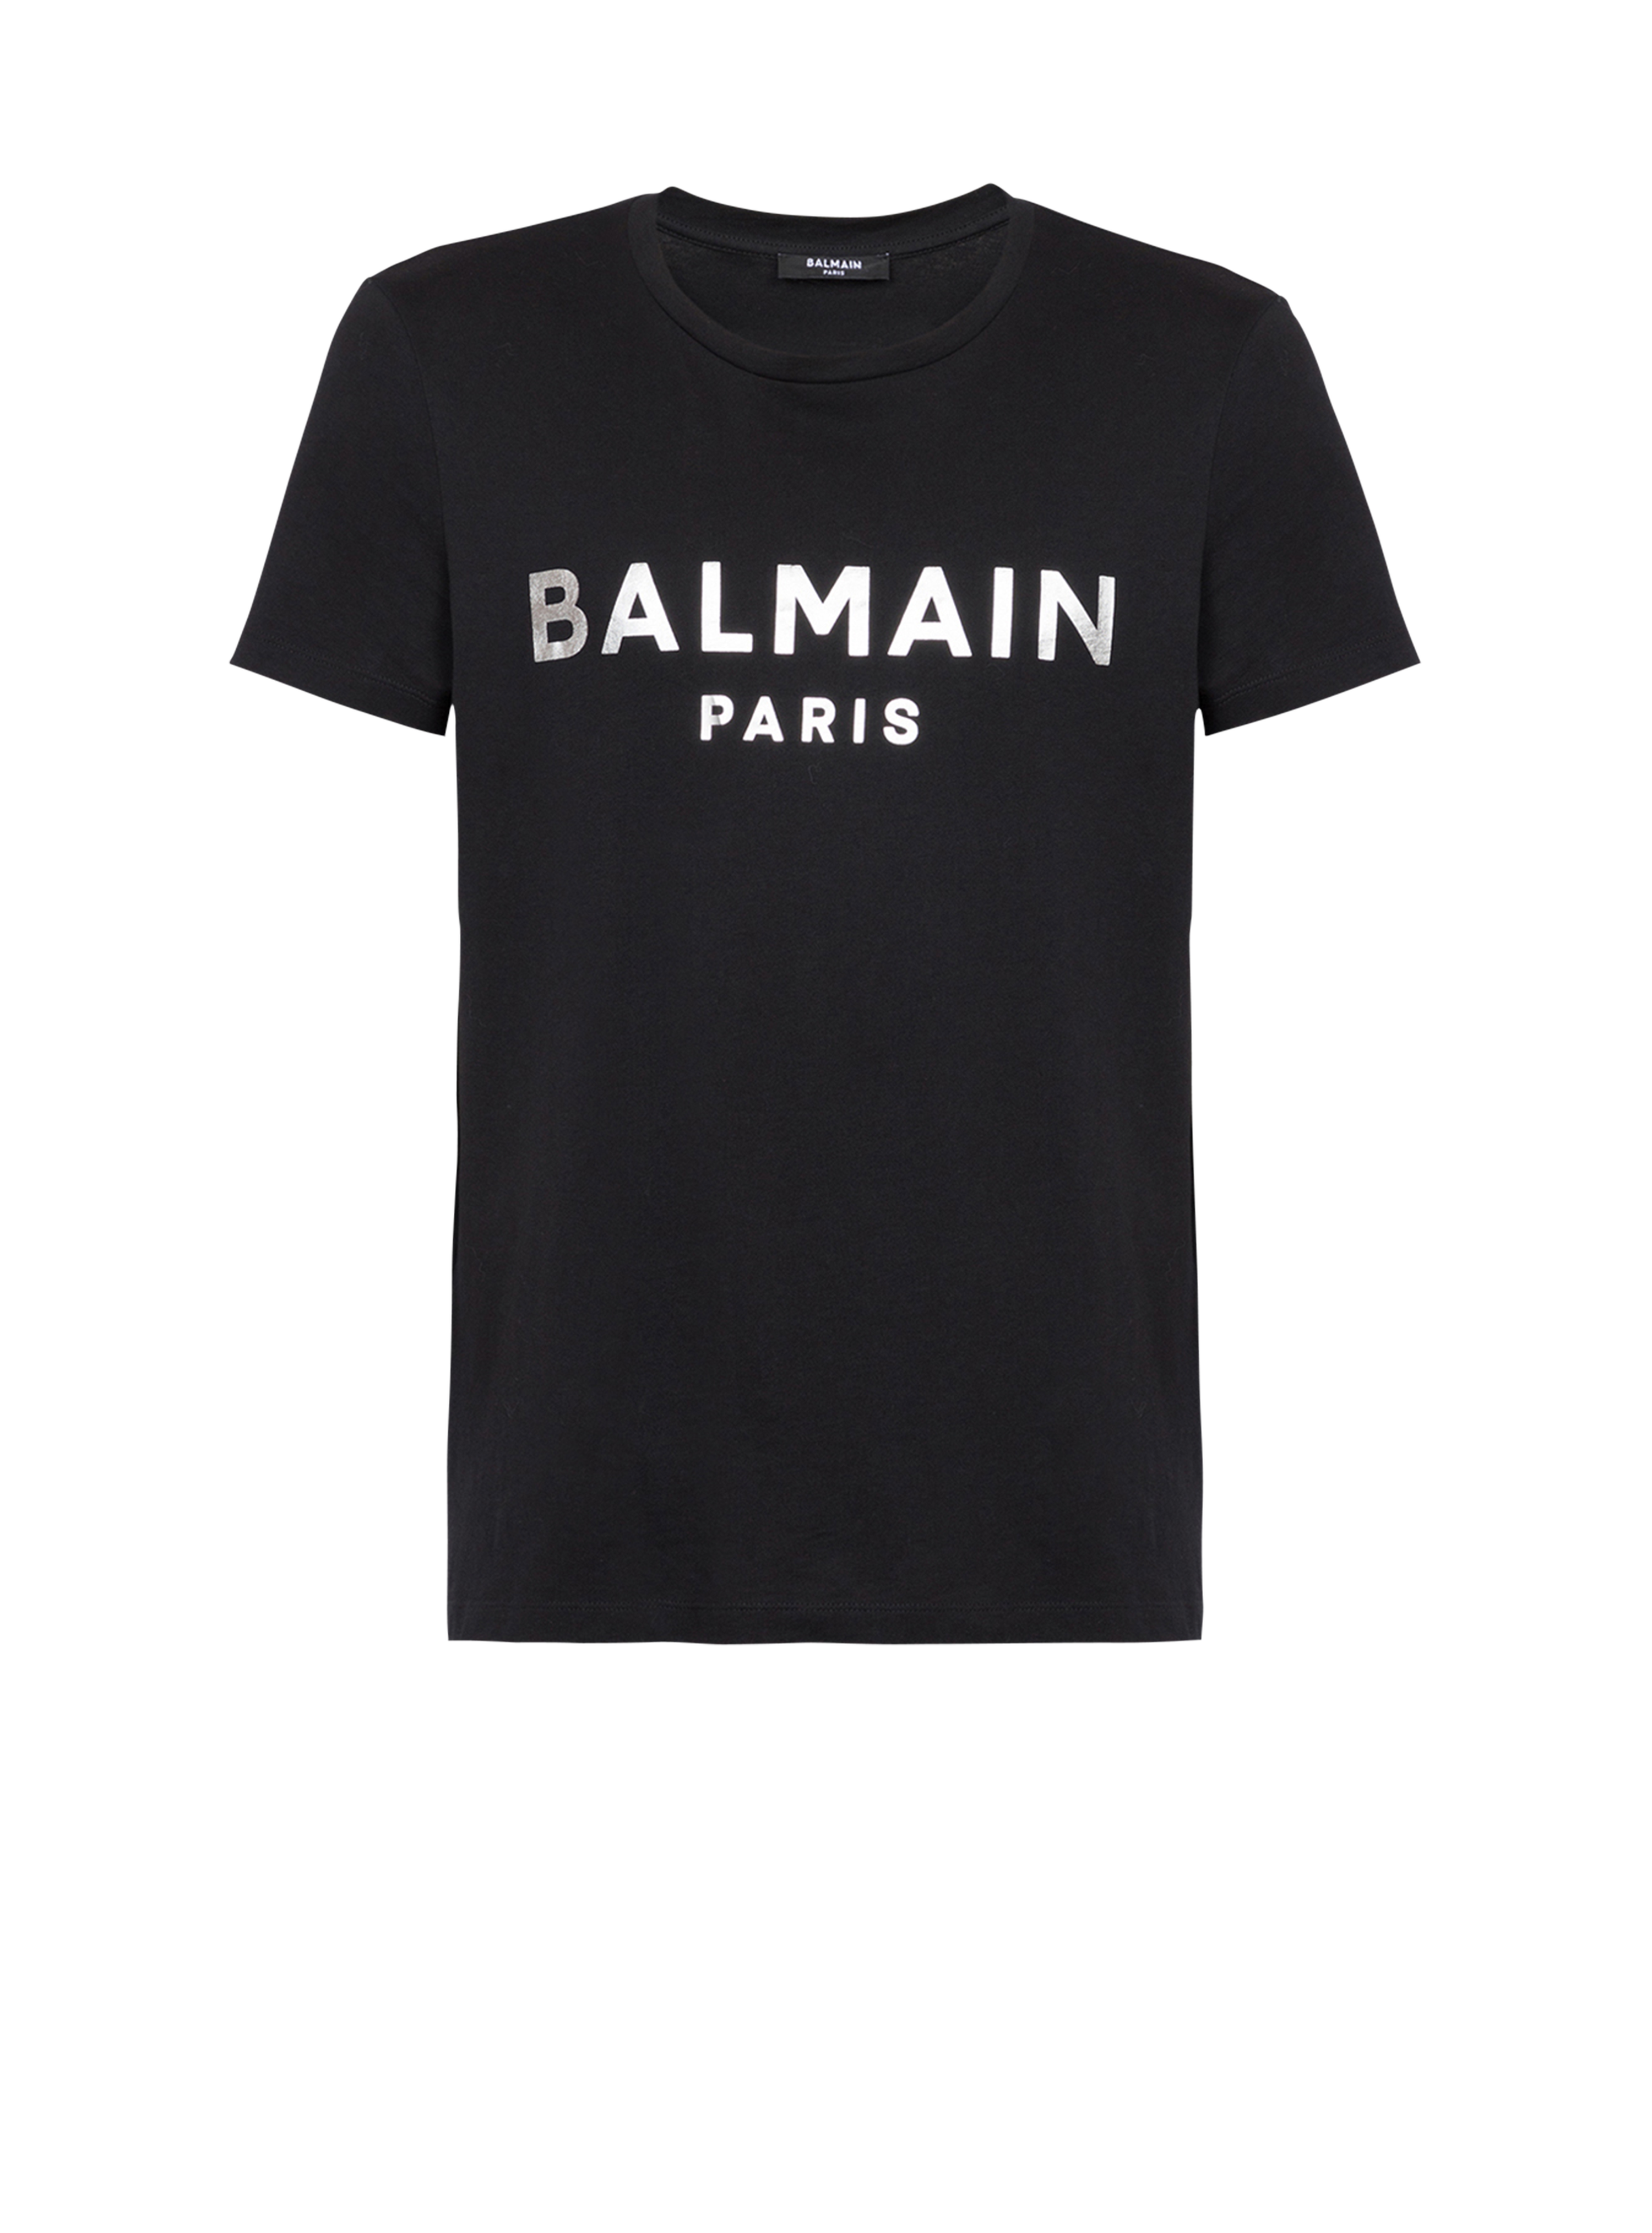 Eco-designed cotton T-shirt with Balmain Paris logo print, silver